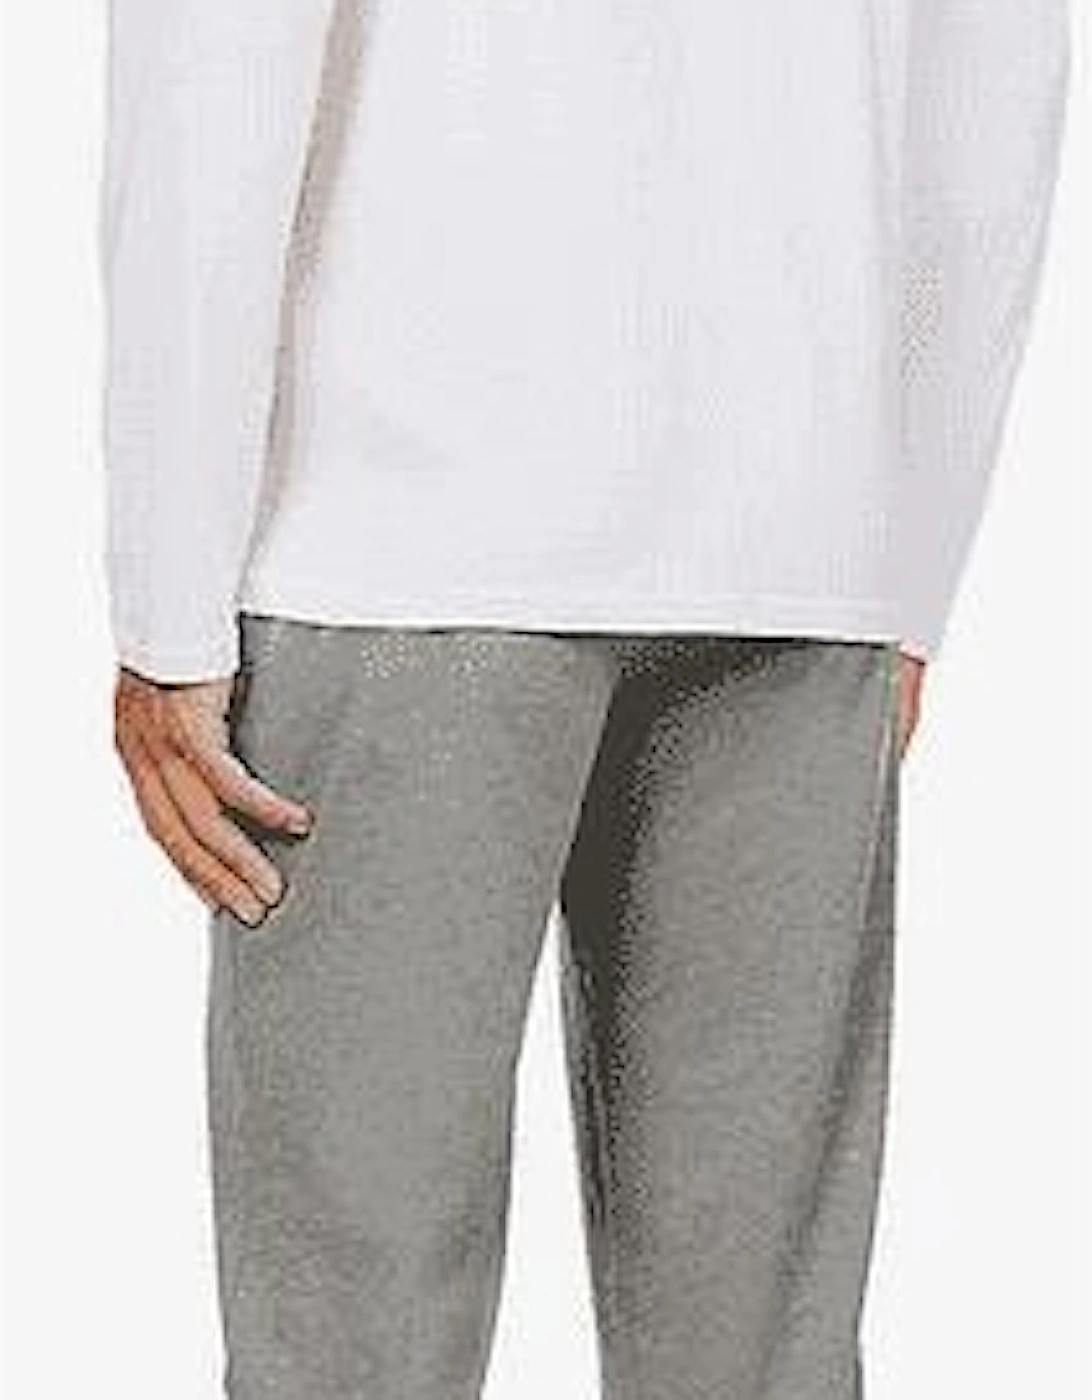 Cotton Long Sleeve Cuffed White/Grey Pyjama Set